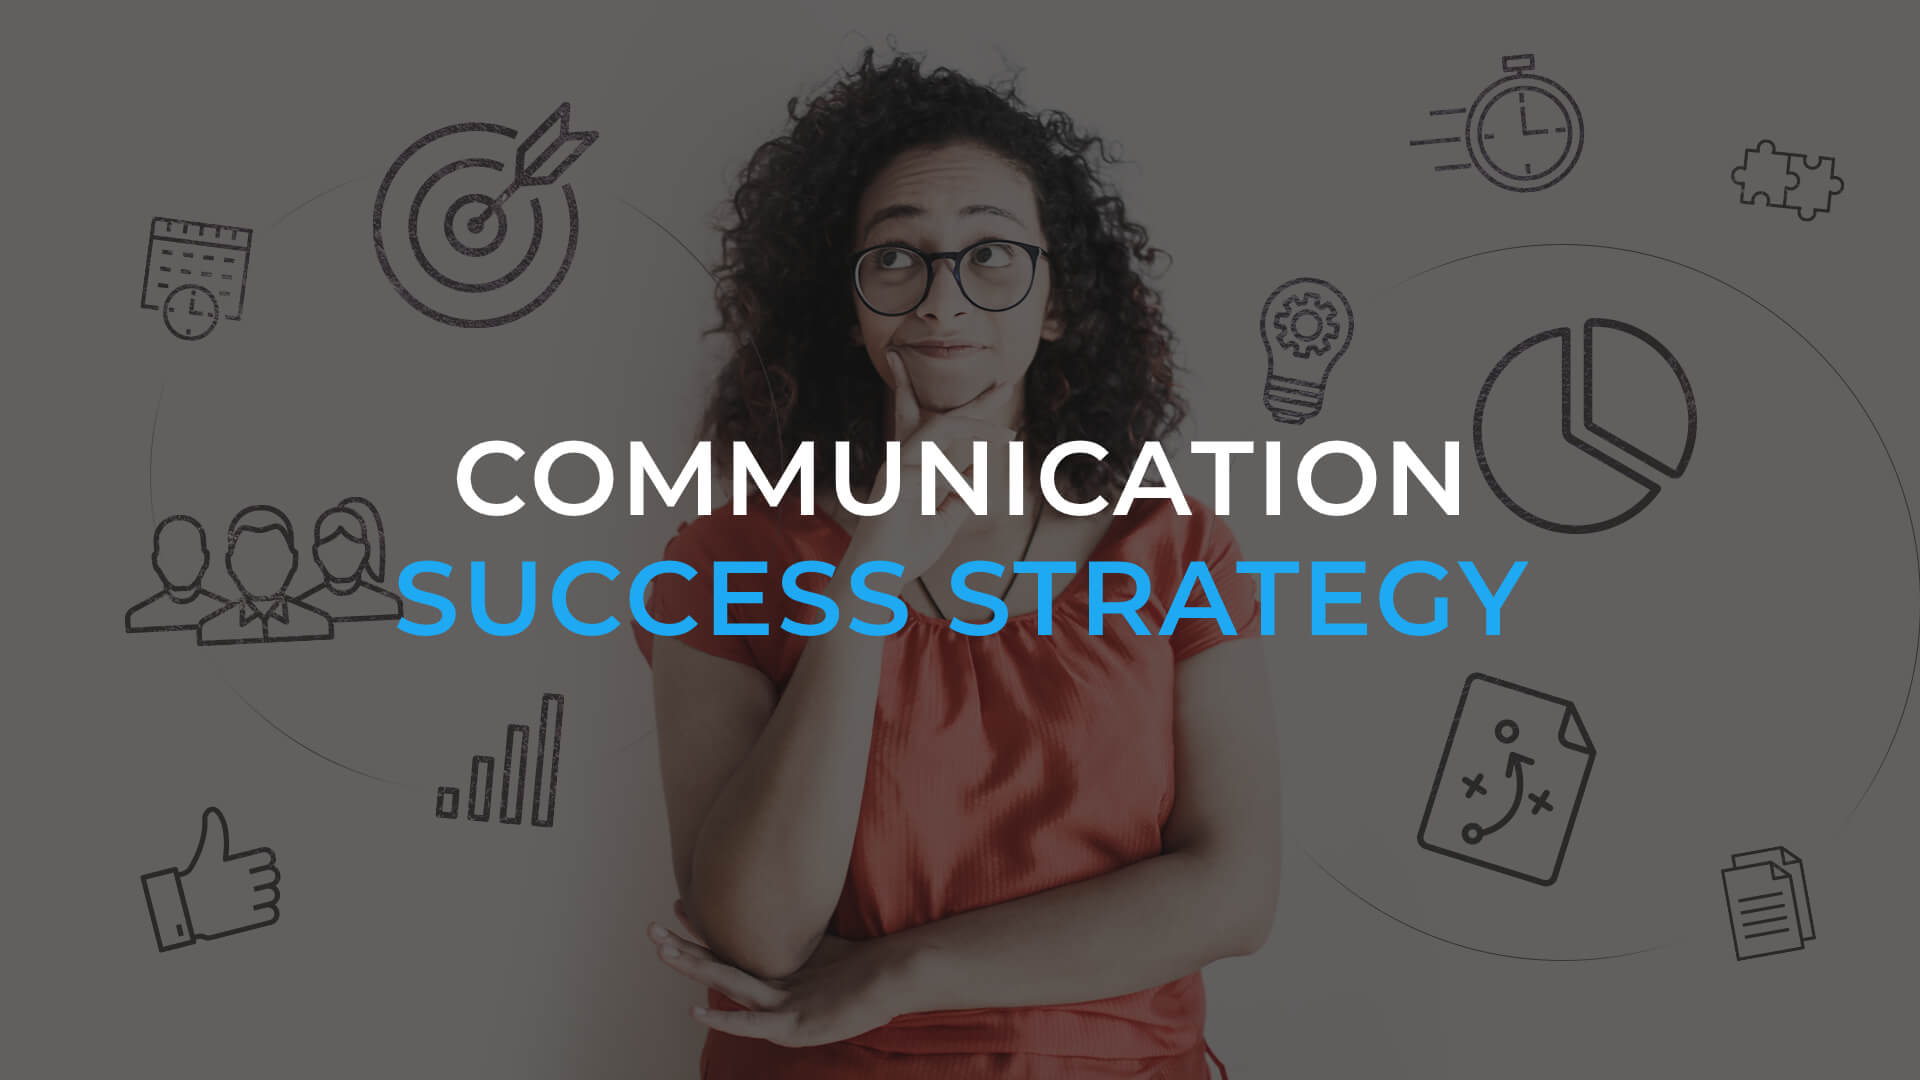 Communication success strategy